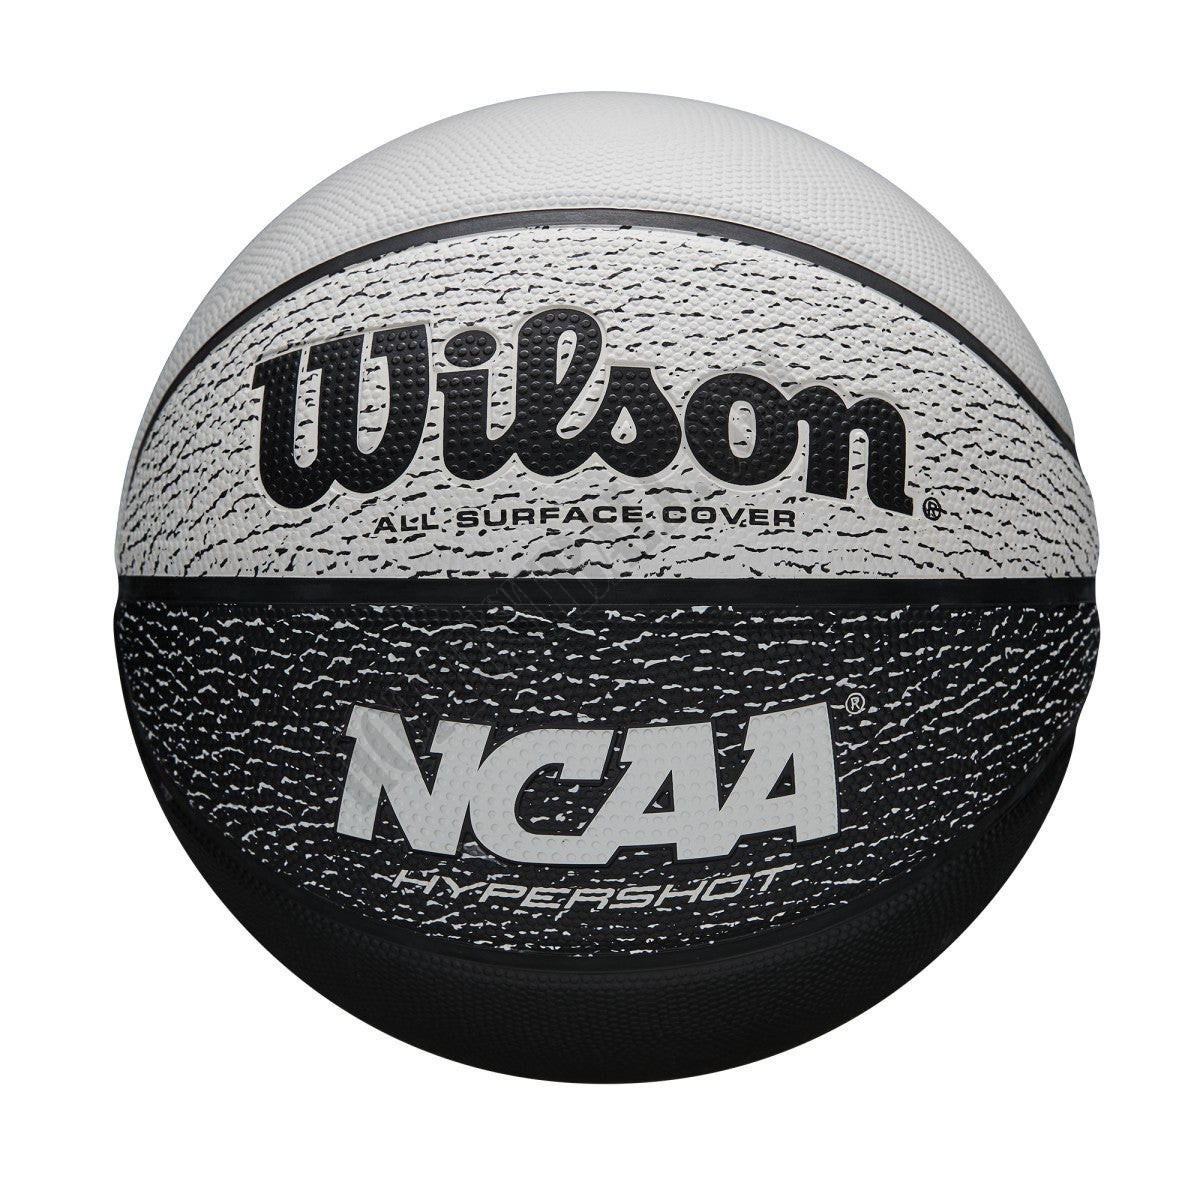 NCAA Hypershot II Basketball - Wilson Discount Store - NCAA Hypershot II Basketball - Wilson Discount Store